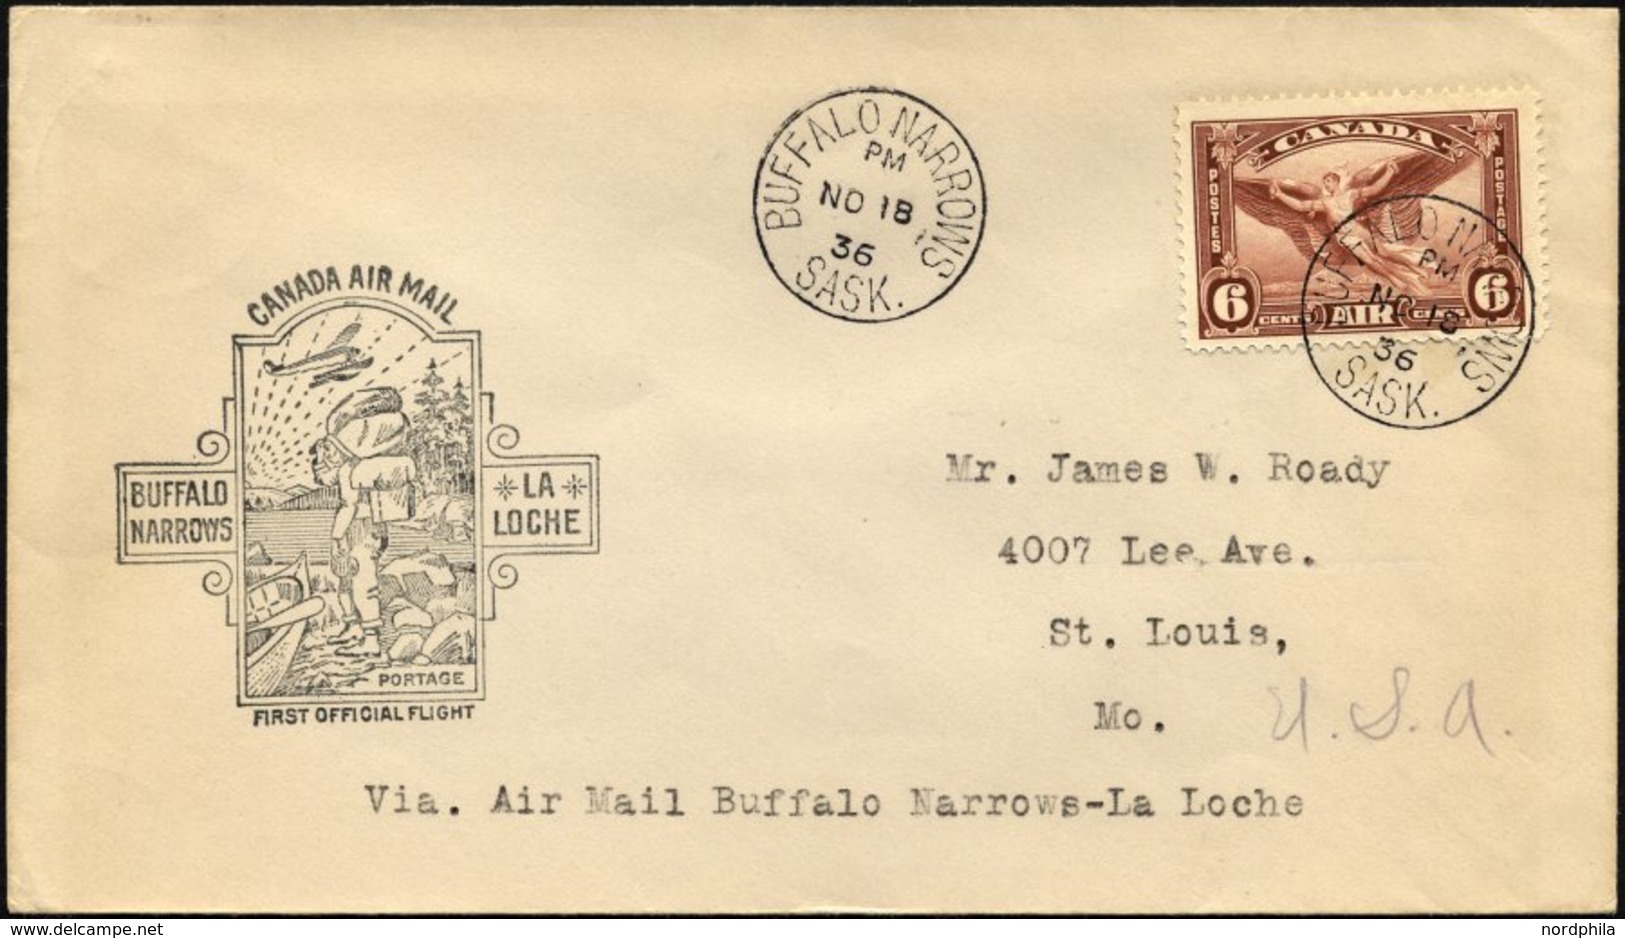 KANADA 196 BRIEF, 18.11.1936, Erstflug BUFFALO NARROWS-LA LOCHE (Teiletappe), Prachtbrief, Müller 286a - Used Stamps